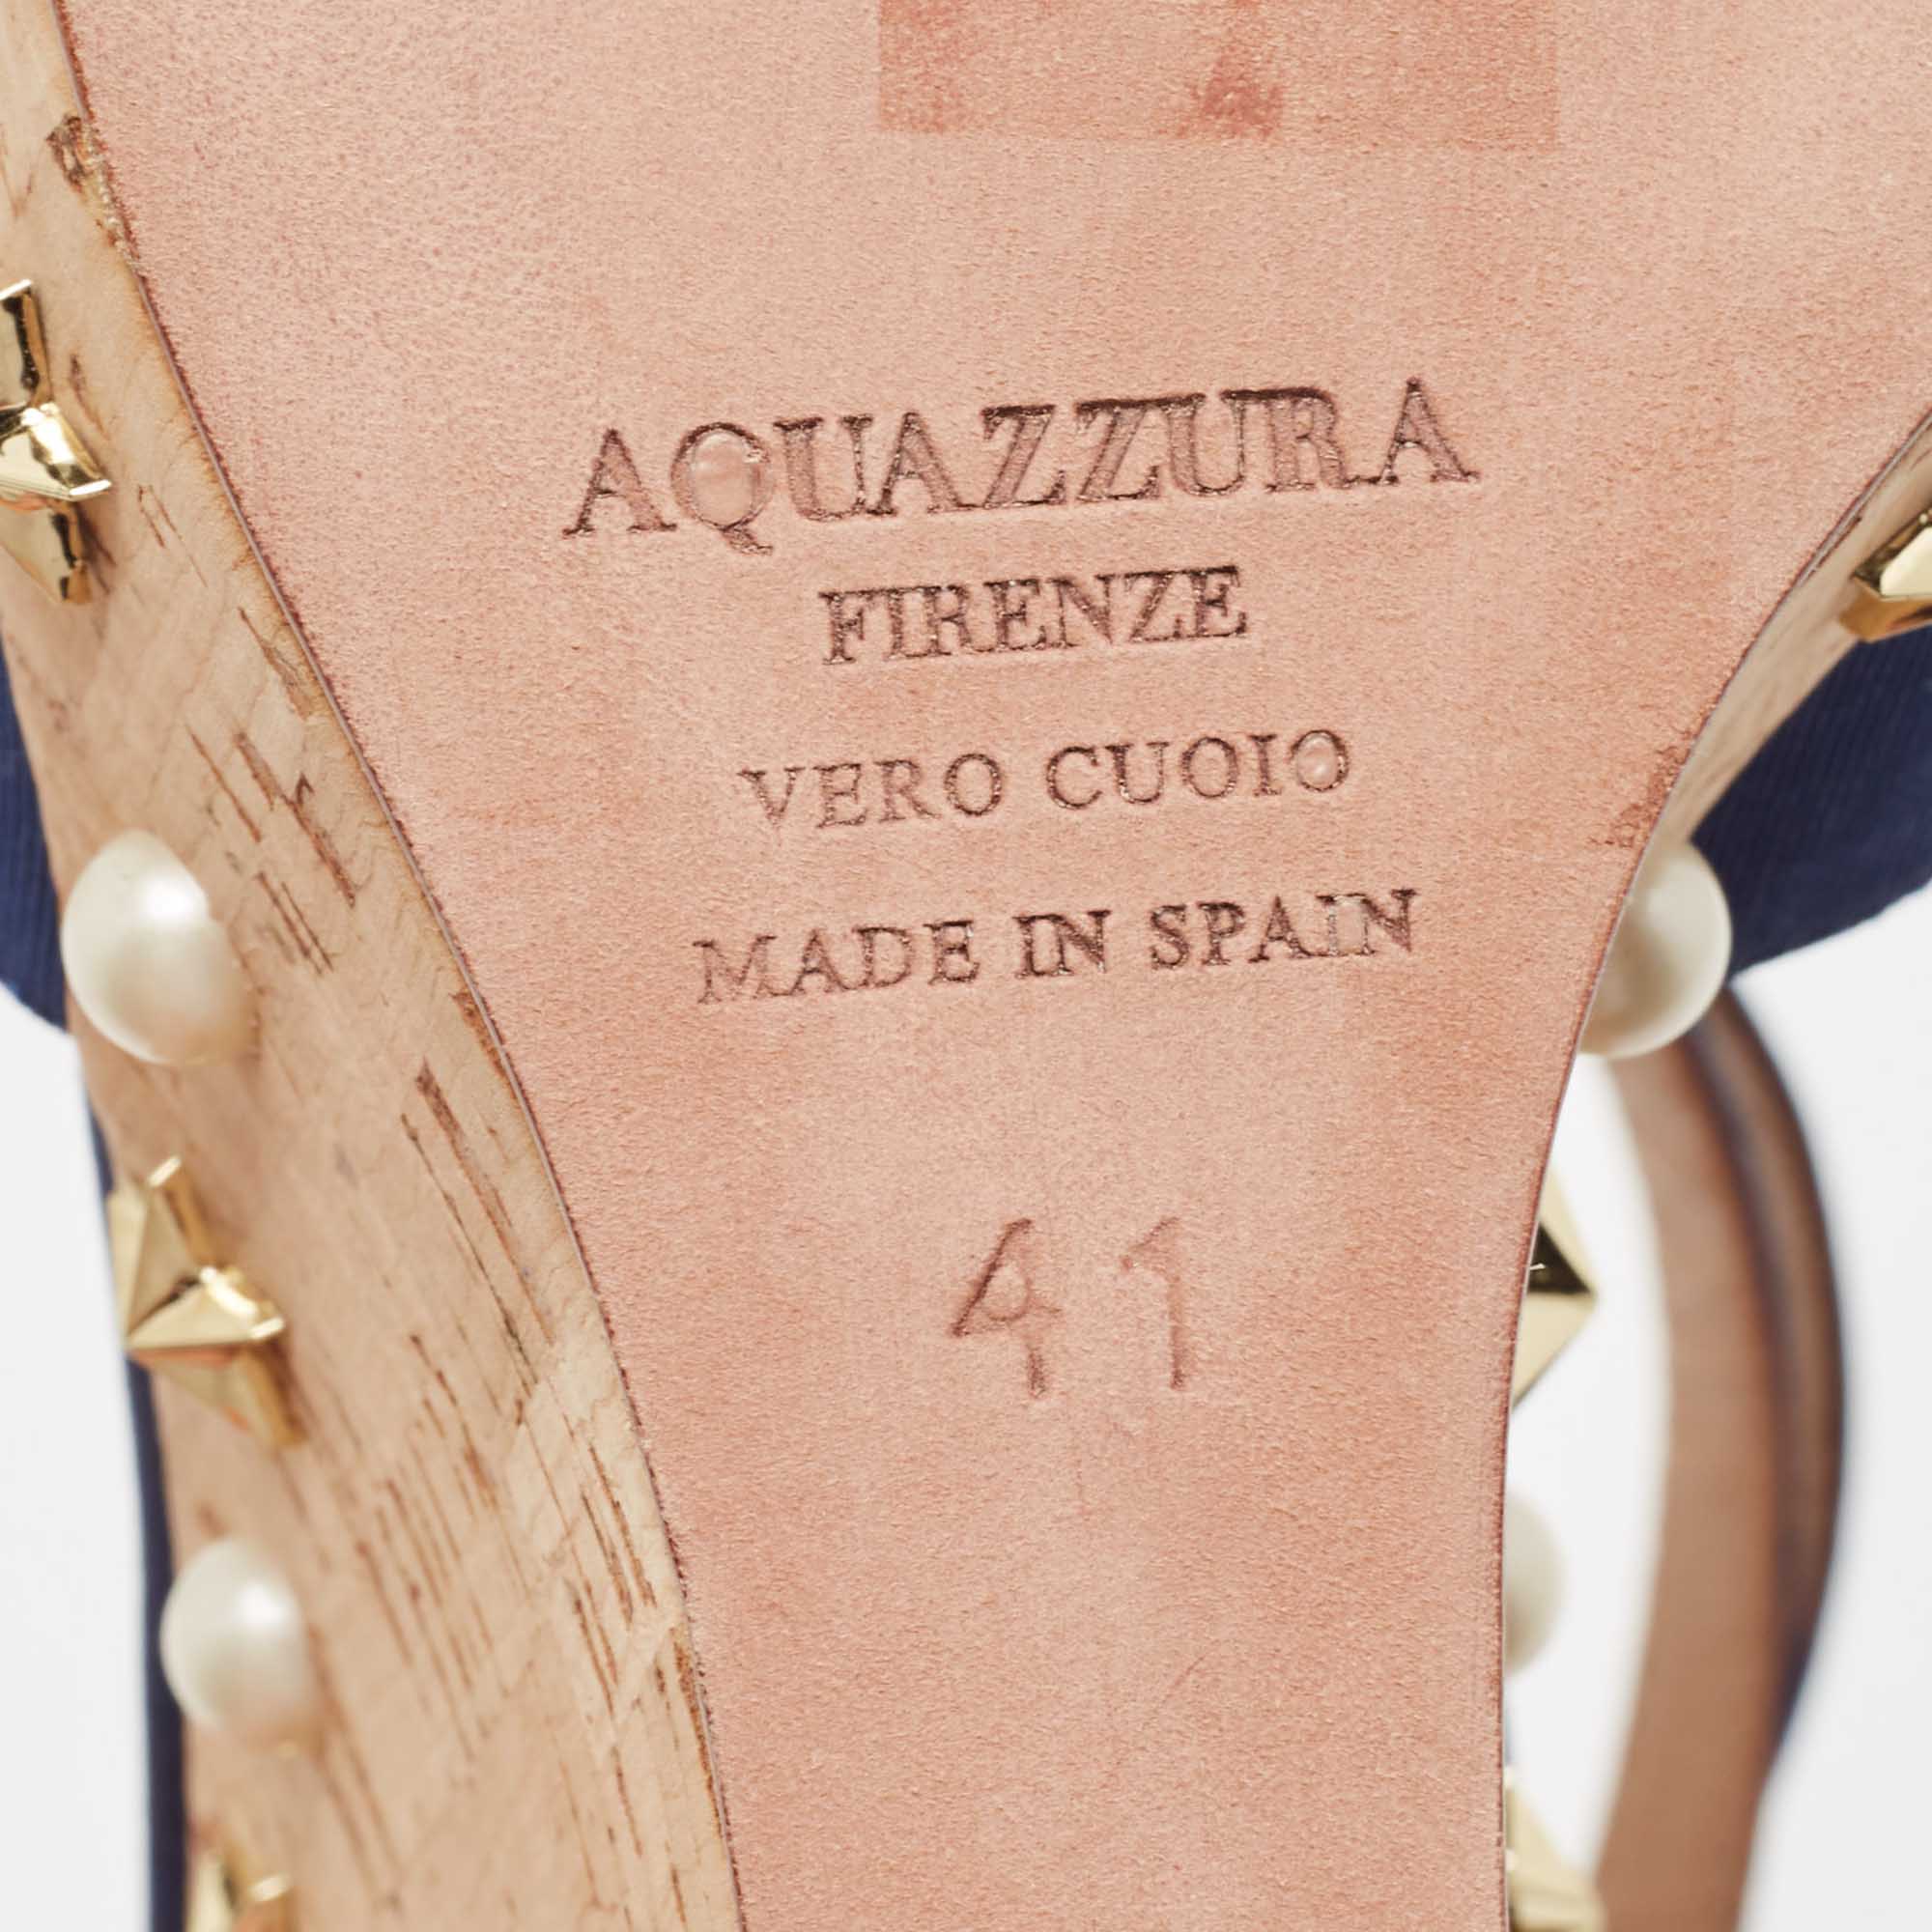 Aquazzura Blue Grosgrain Embellished Harlow Wedge Sandals Size 41